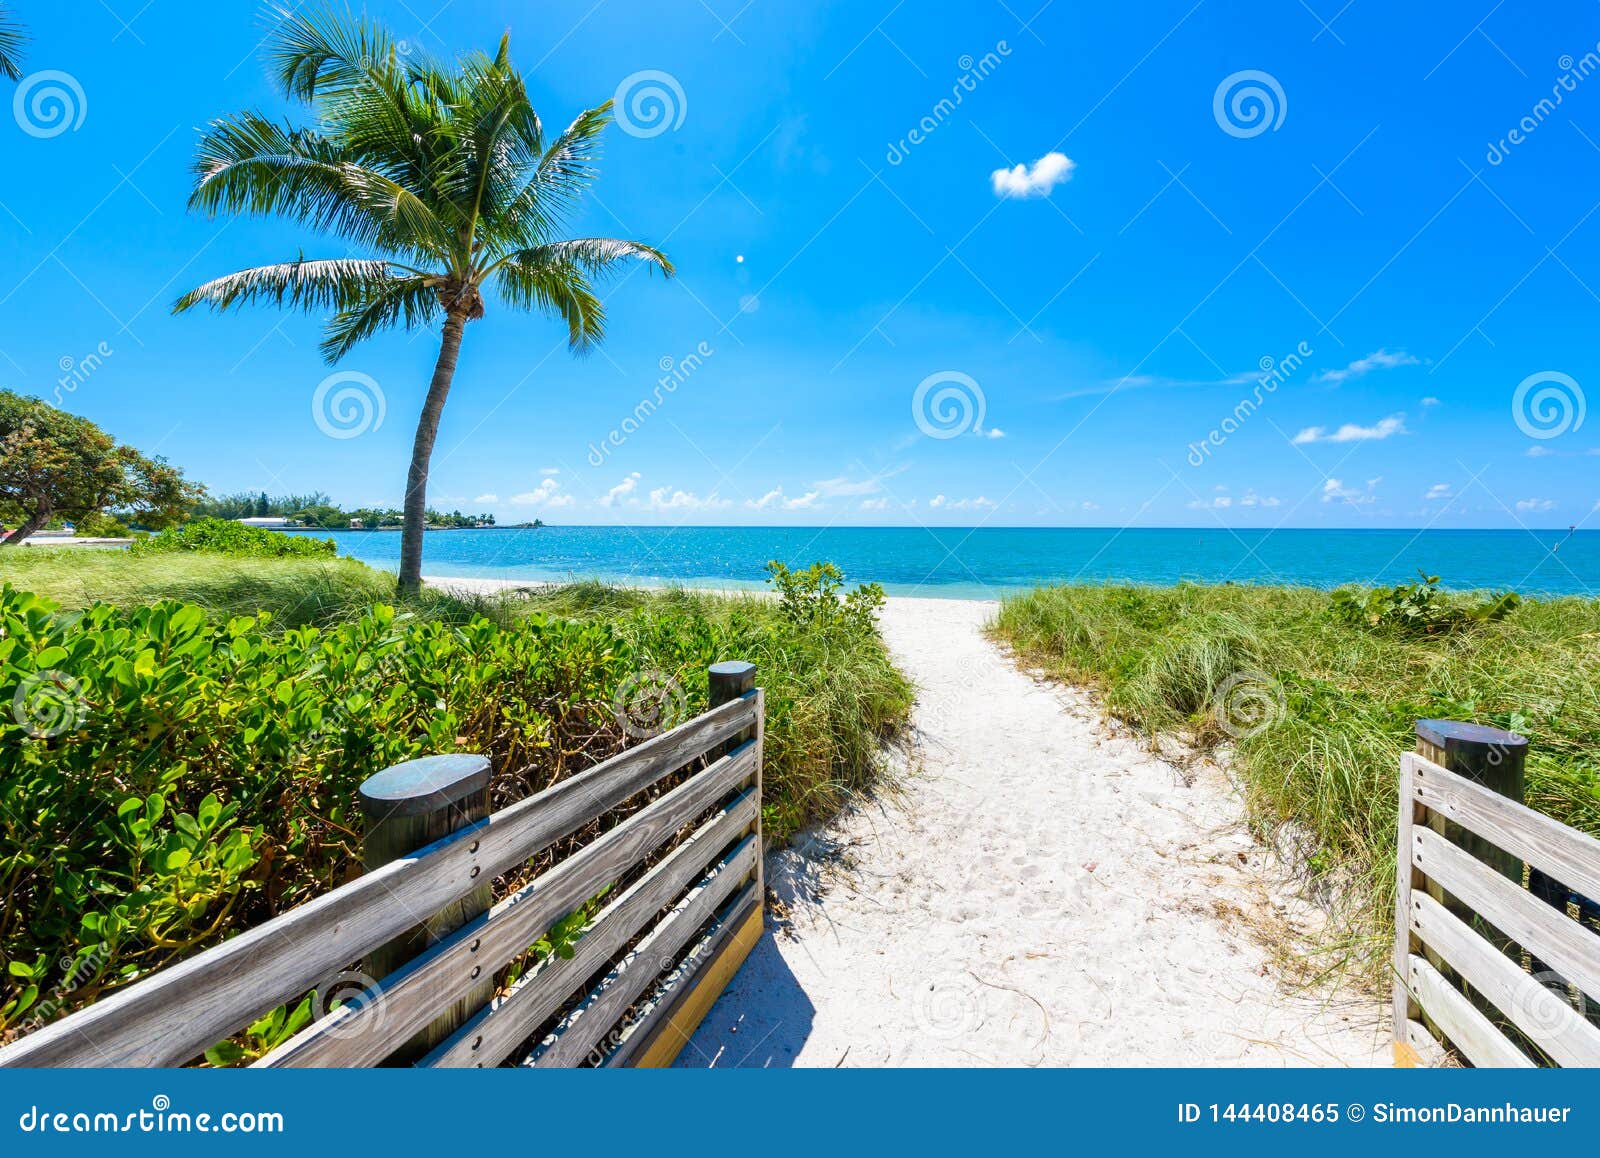 sombrero beach with palm trees on the florida keys, marathon, florida, usa. tropical and paradise destination for vacation